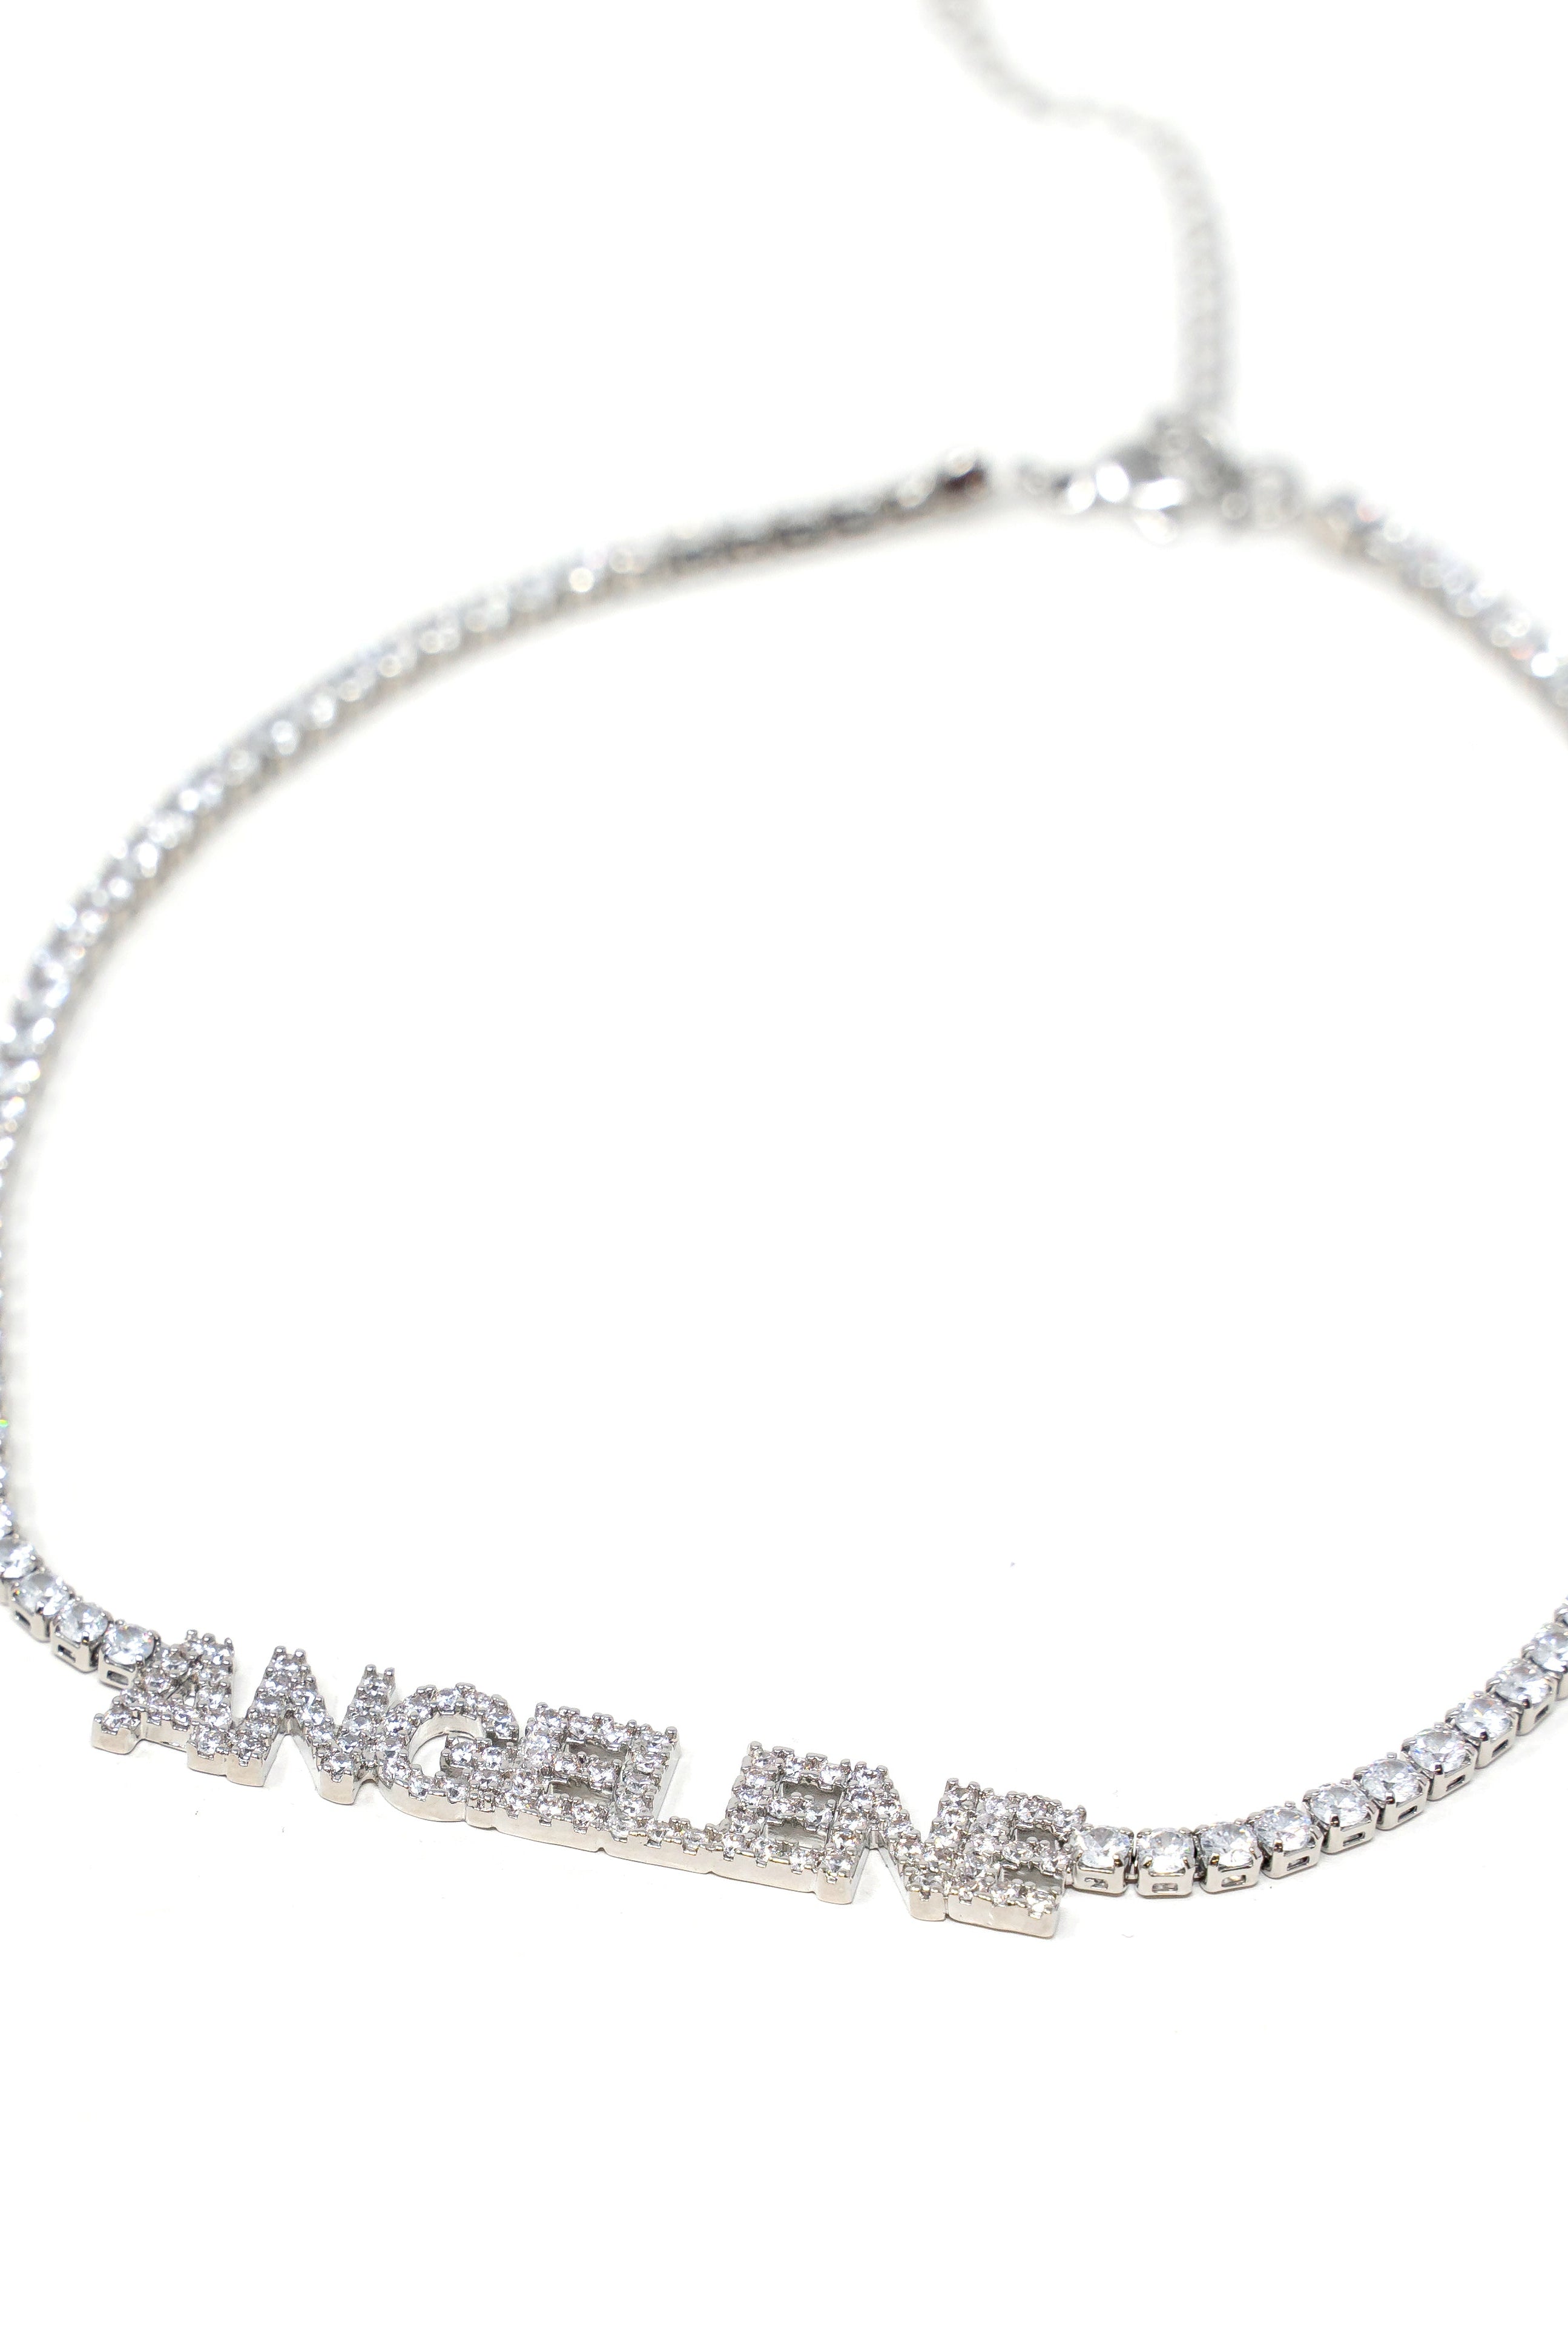 Customized Tennis Chain Nameplate Necklace-Necklaces-TSK® Custom Jewelry-Urban Threadz Boutique, Women's Fashion Boutique in Saugatuck, MI